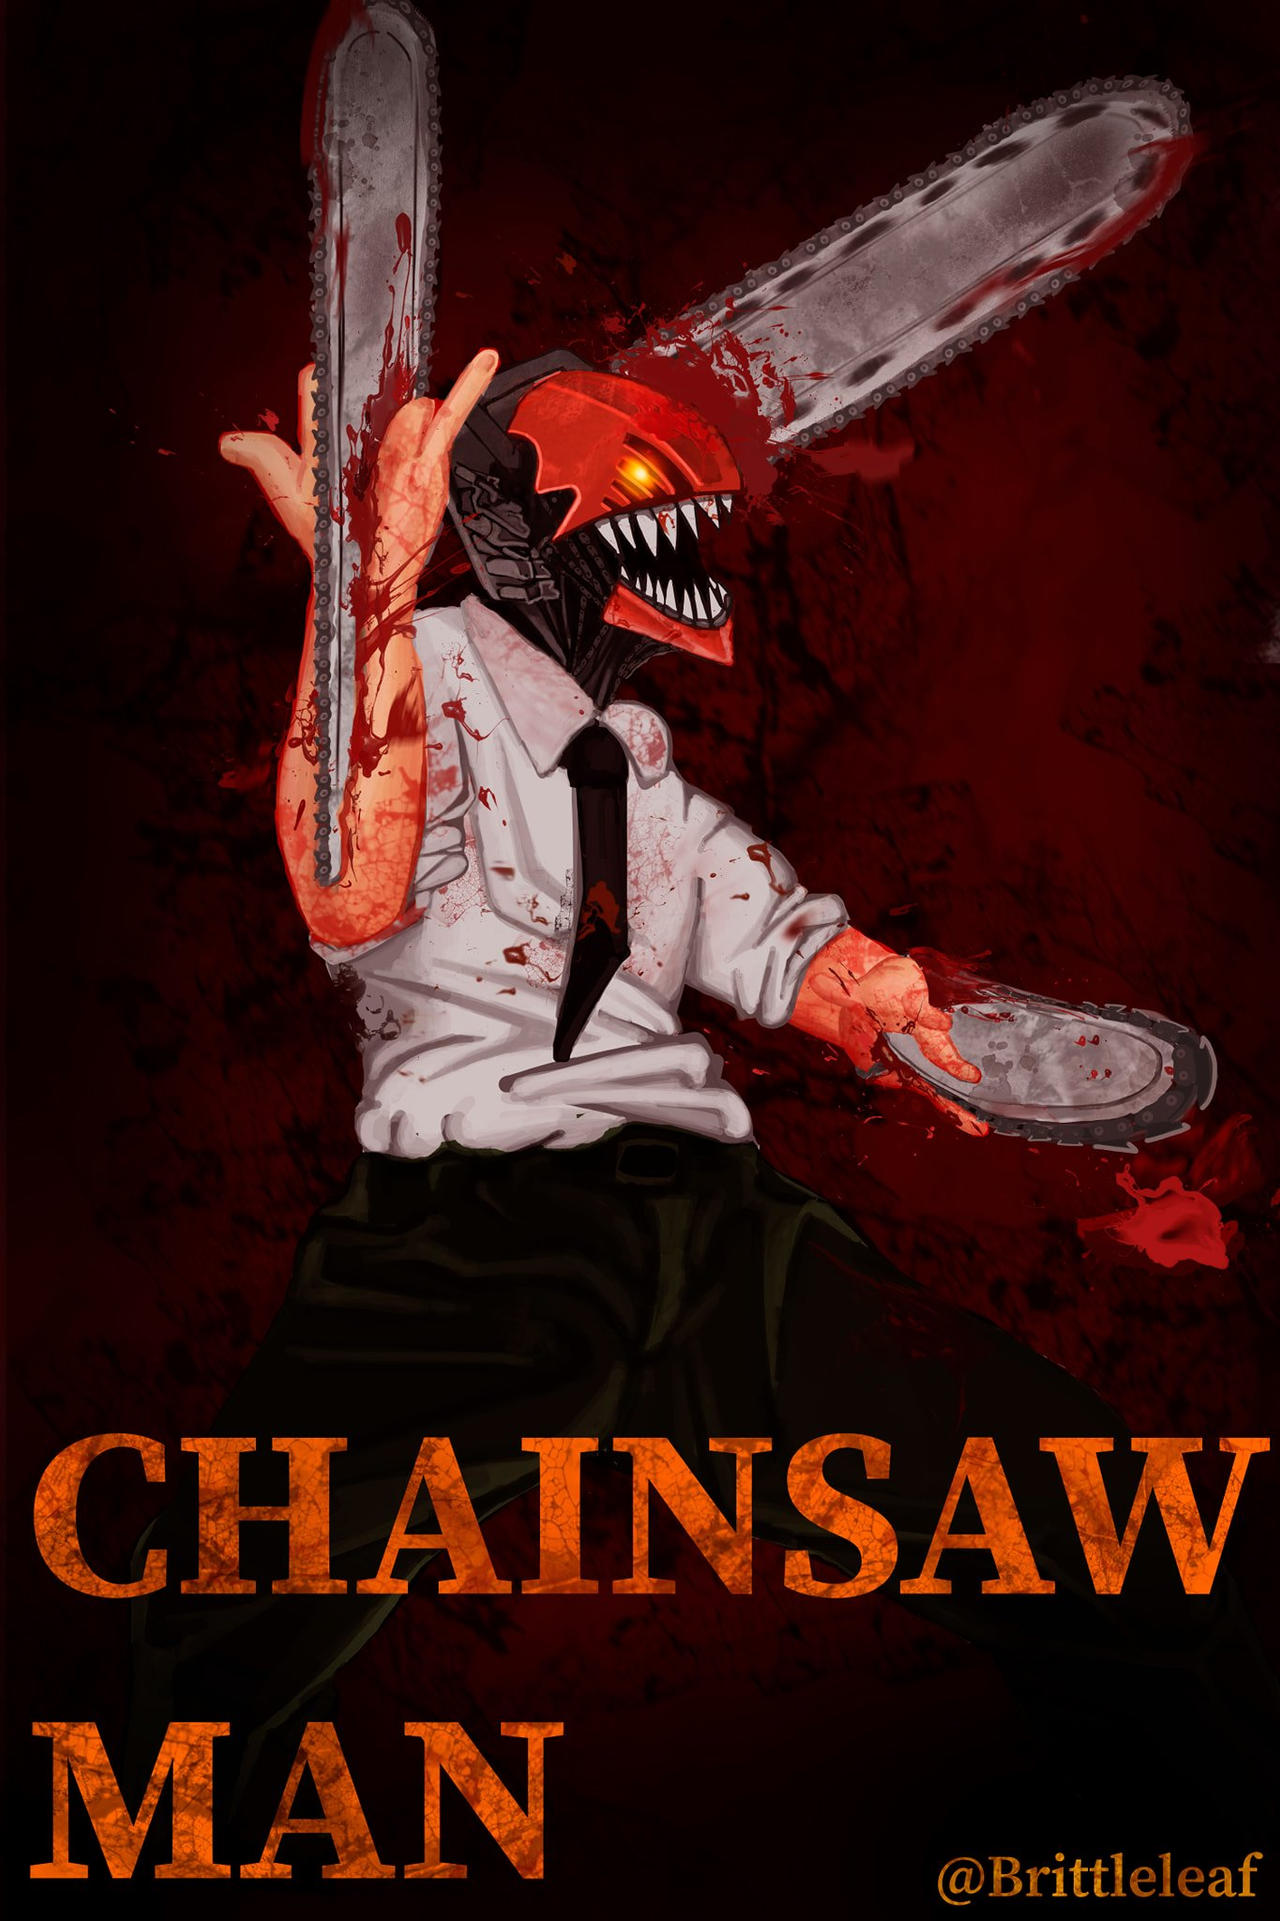 Denji from chainsawman manga by AdnanS4MA on DeviantArt